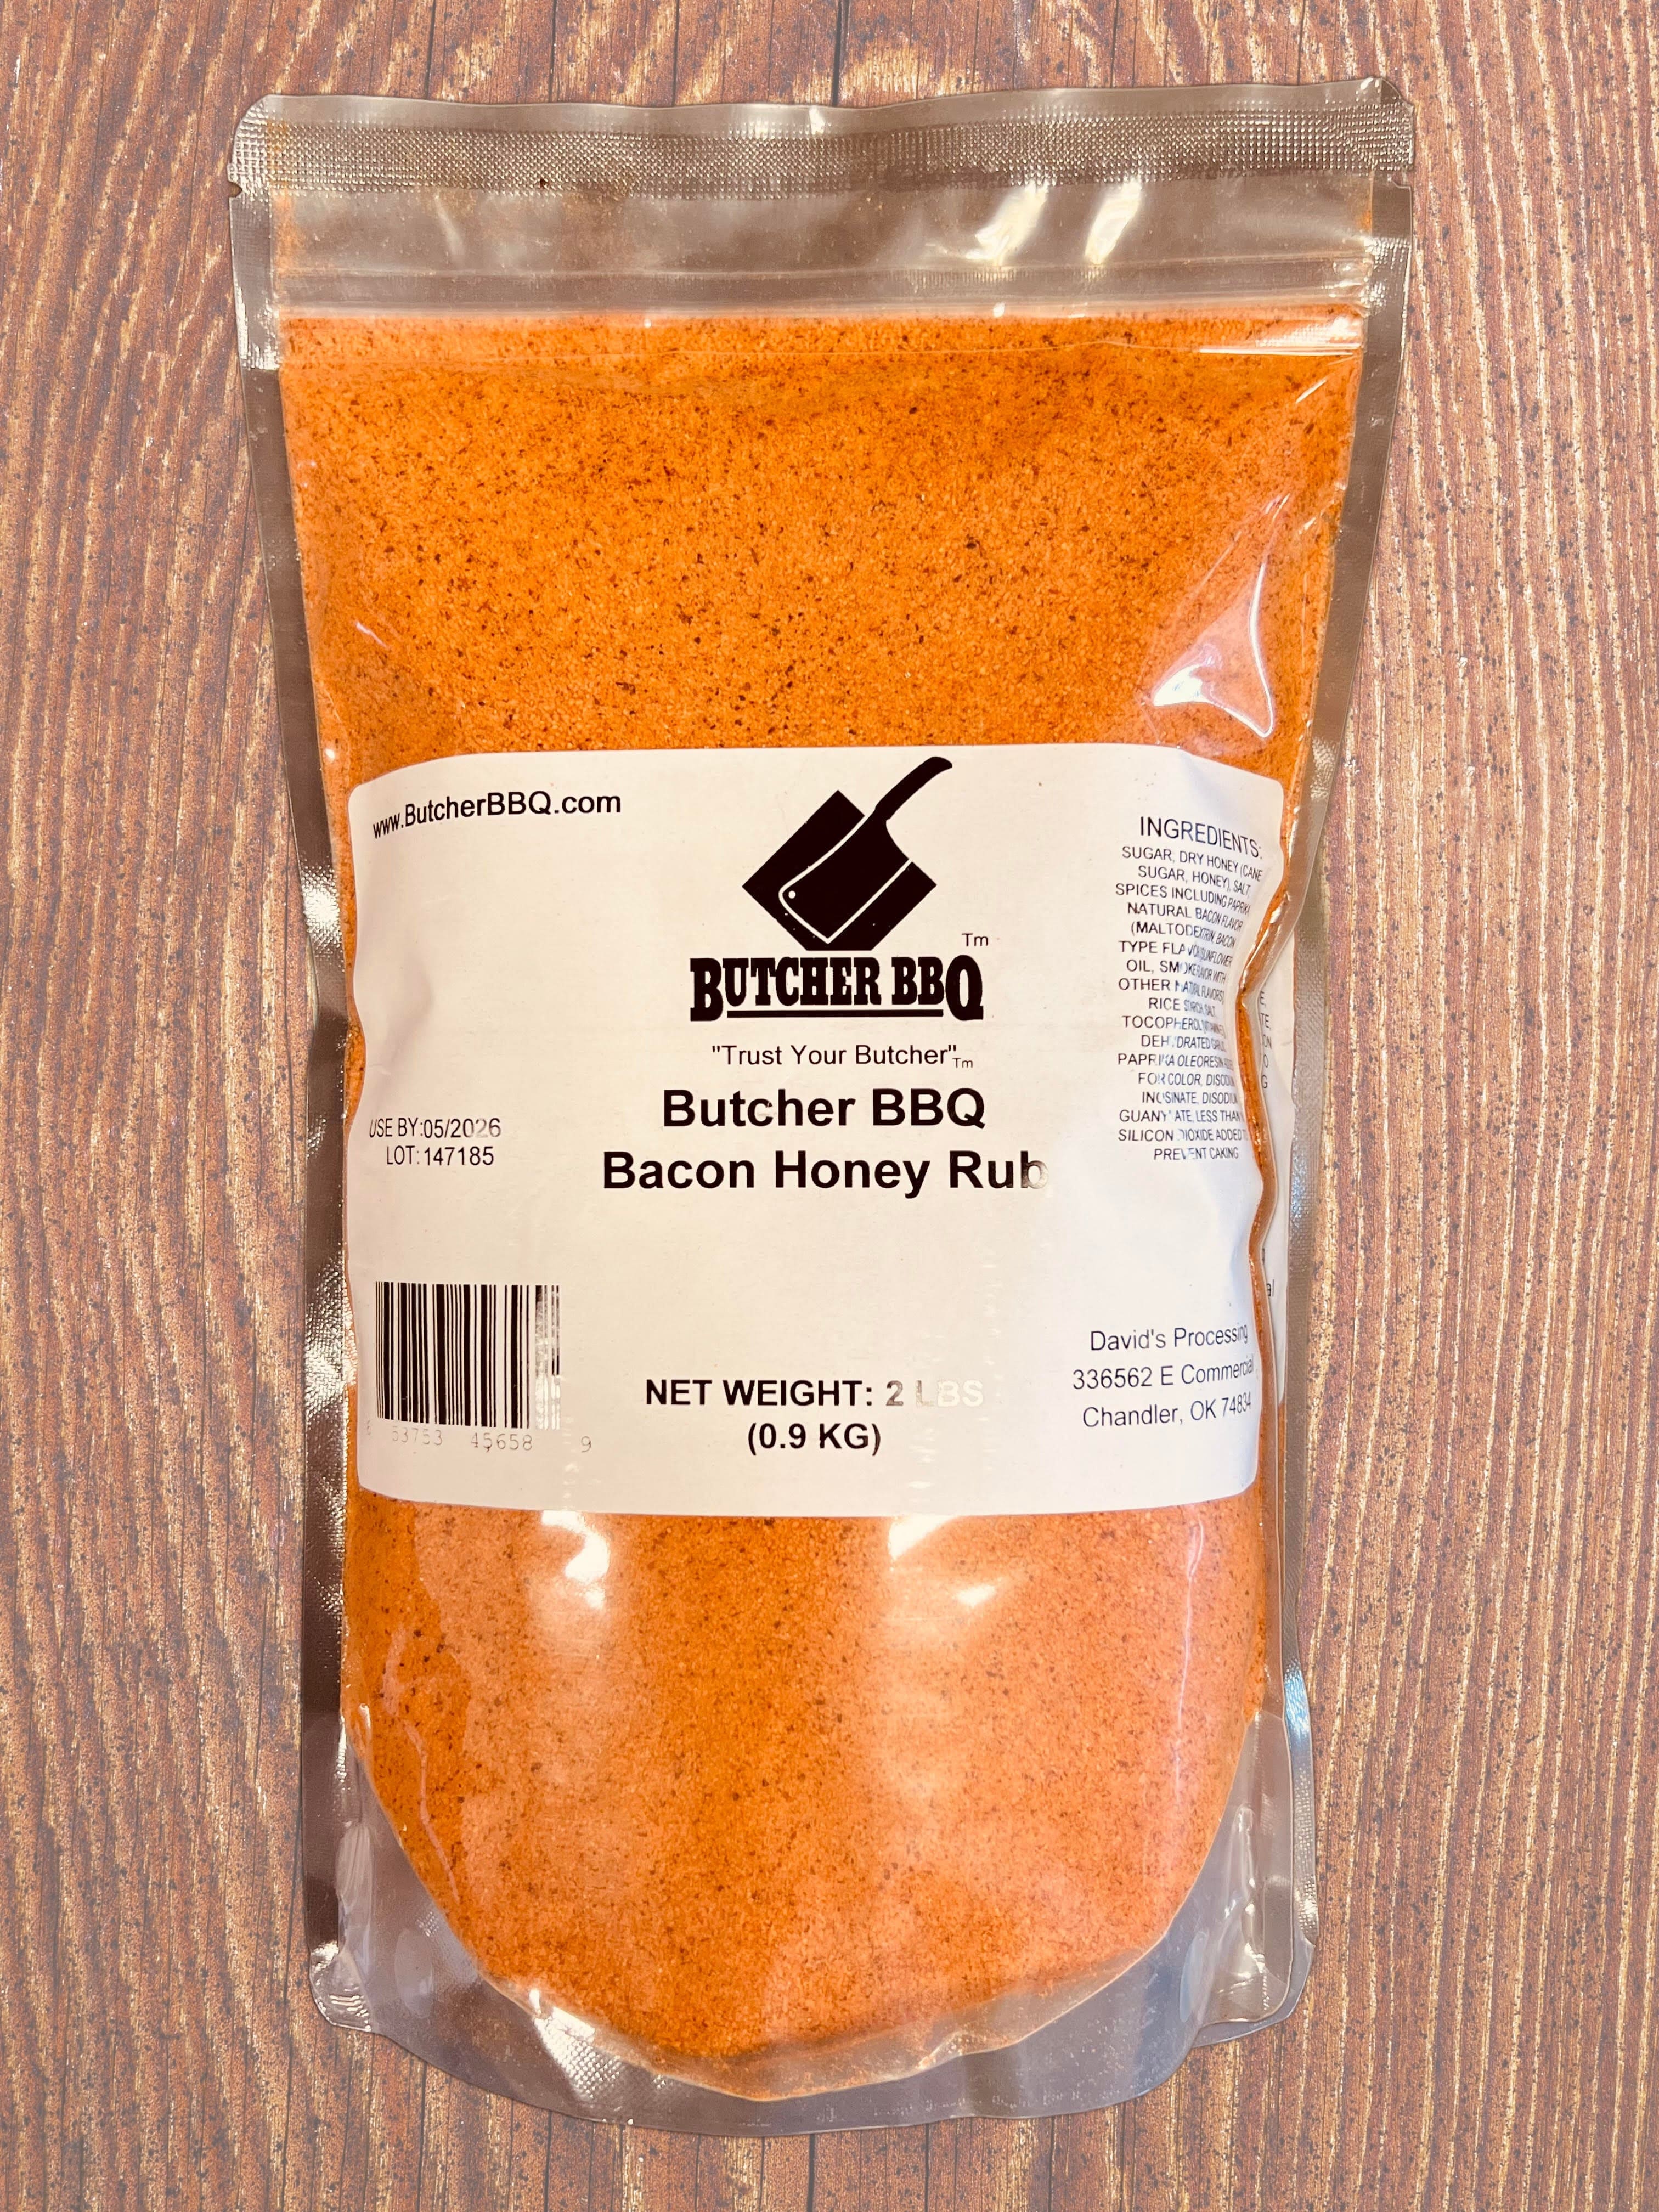 Butcher BBQ BBQ spice and rub Bacon Honey Rub